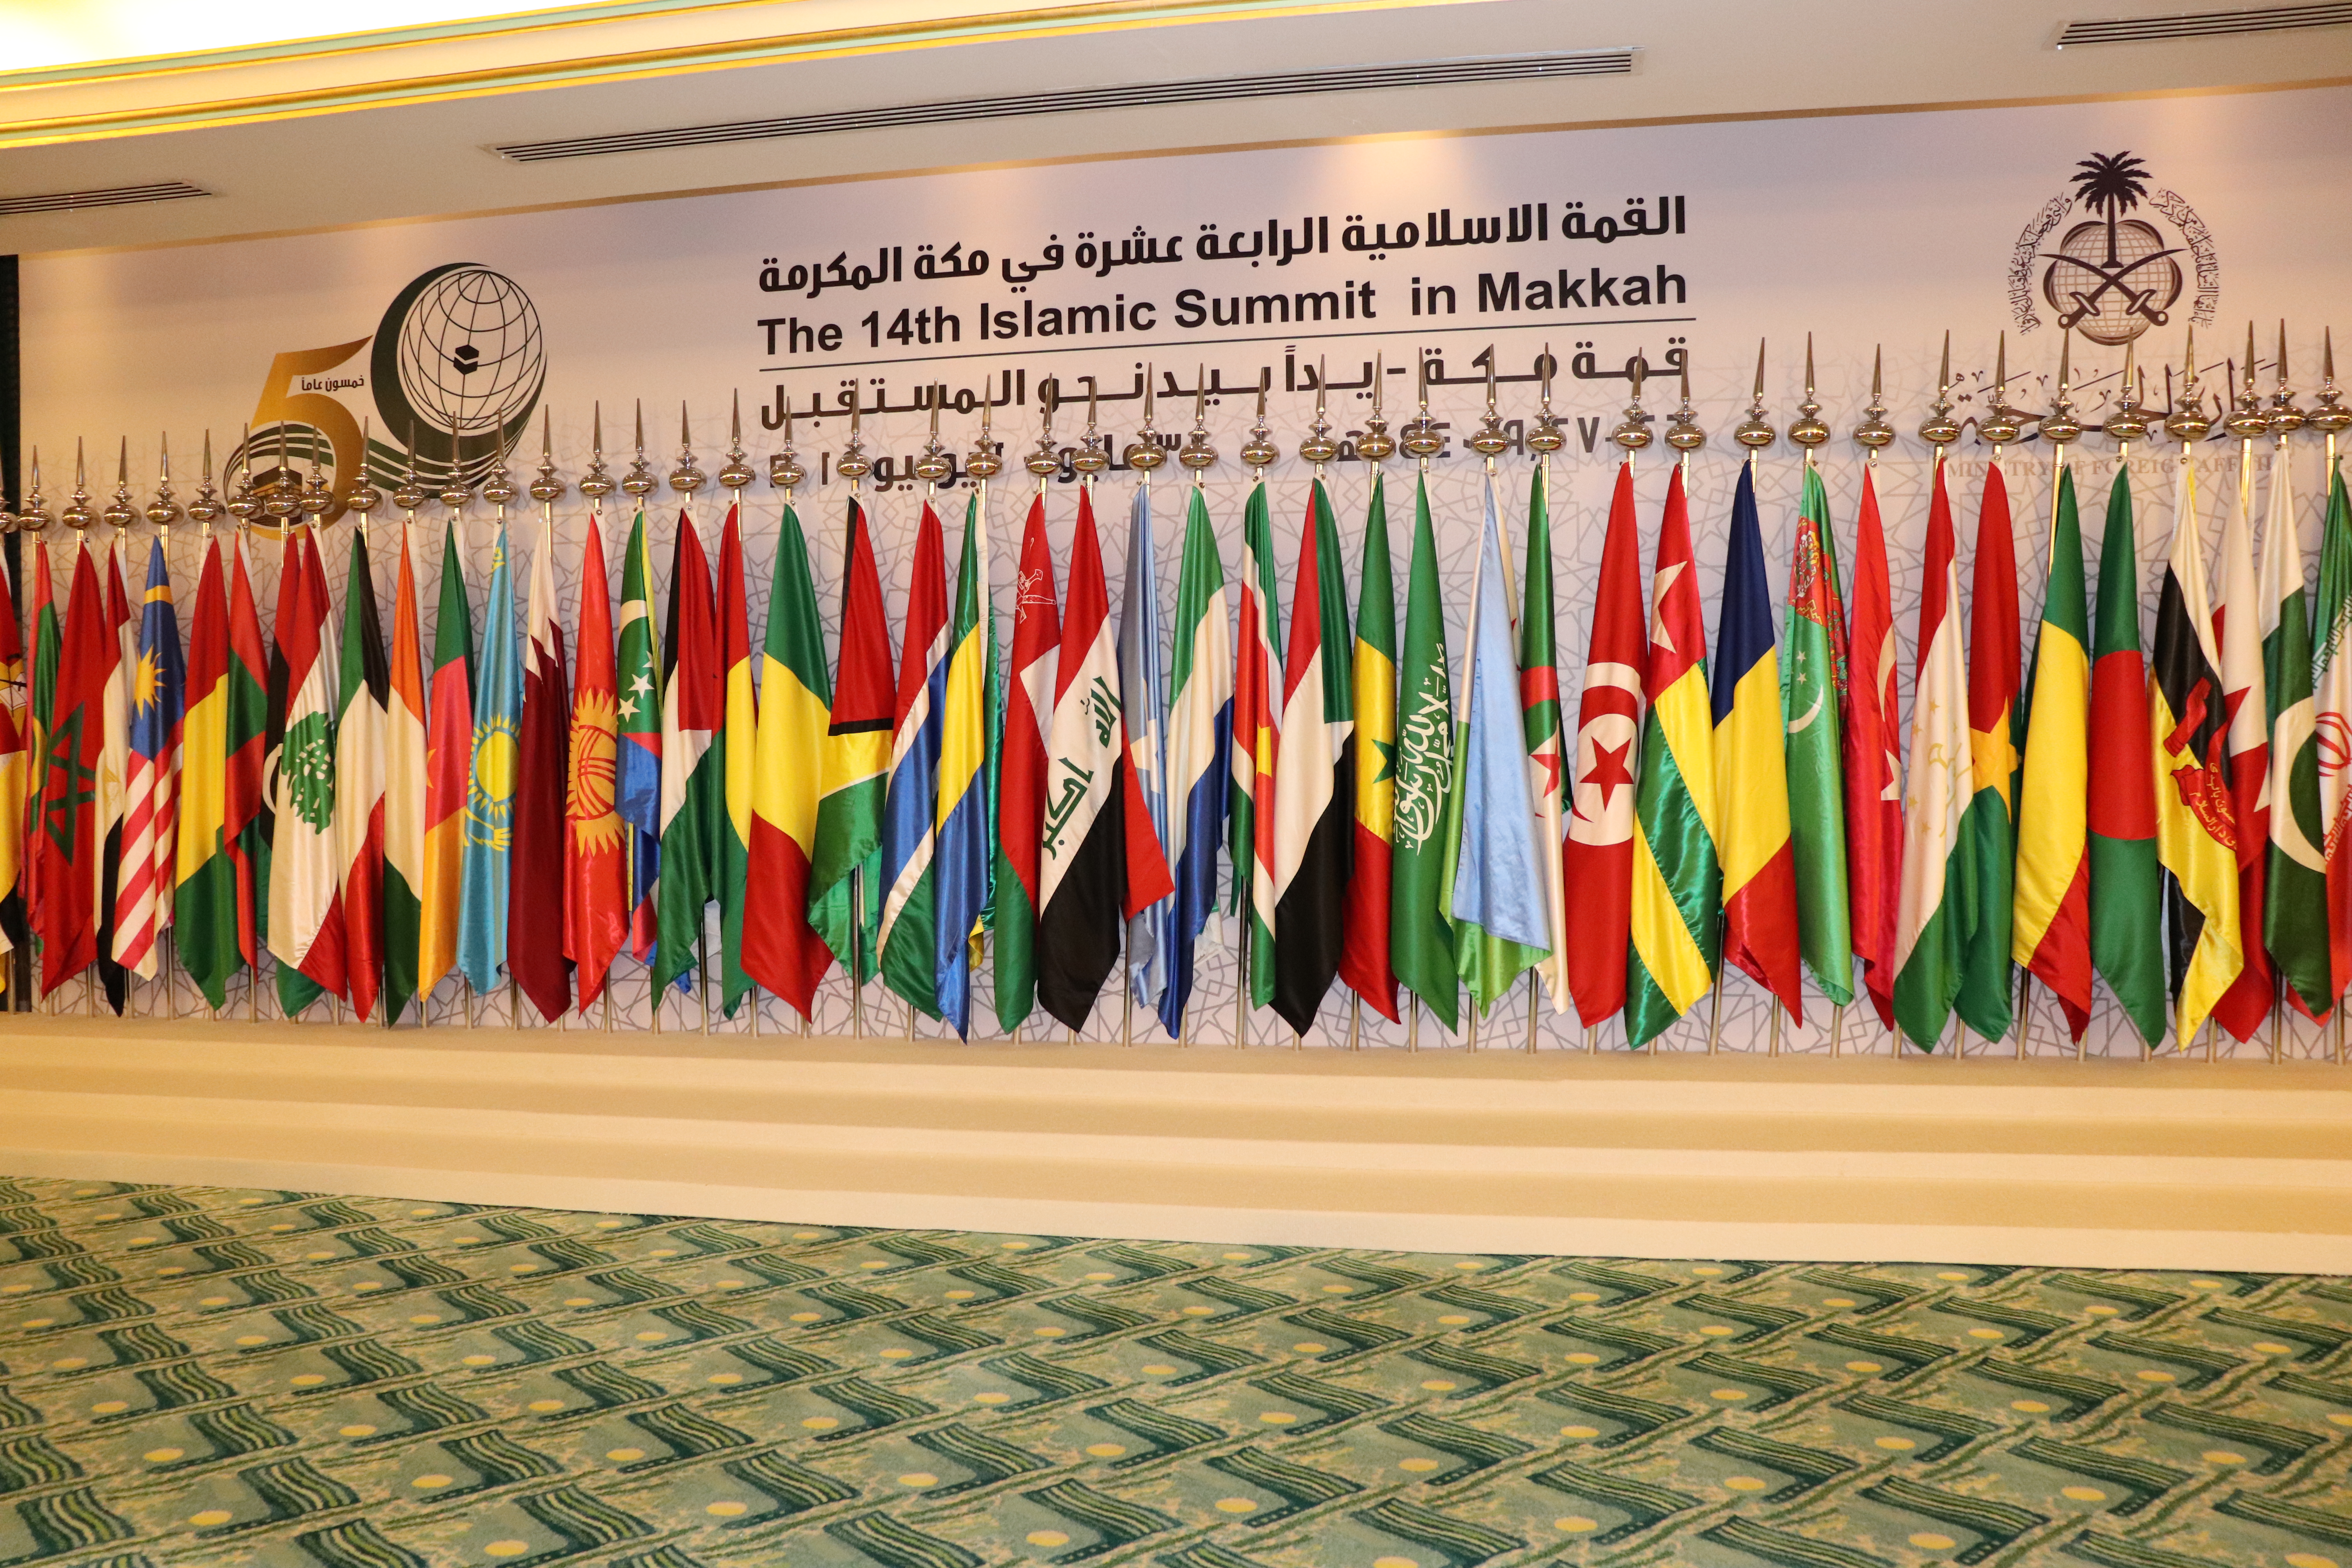 Makkah Summit Hand in Hand Towards the Future